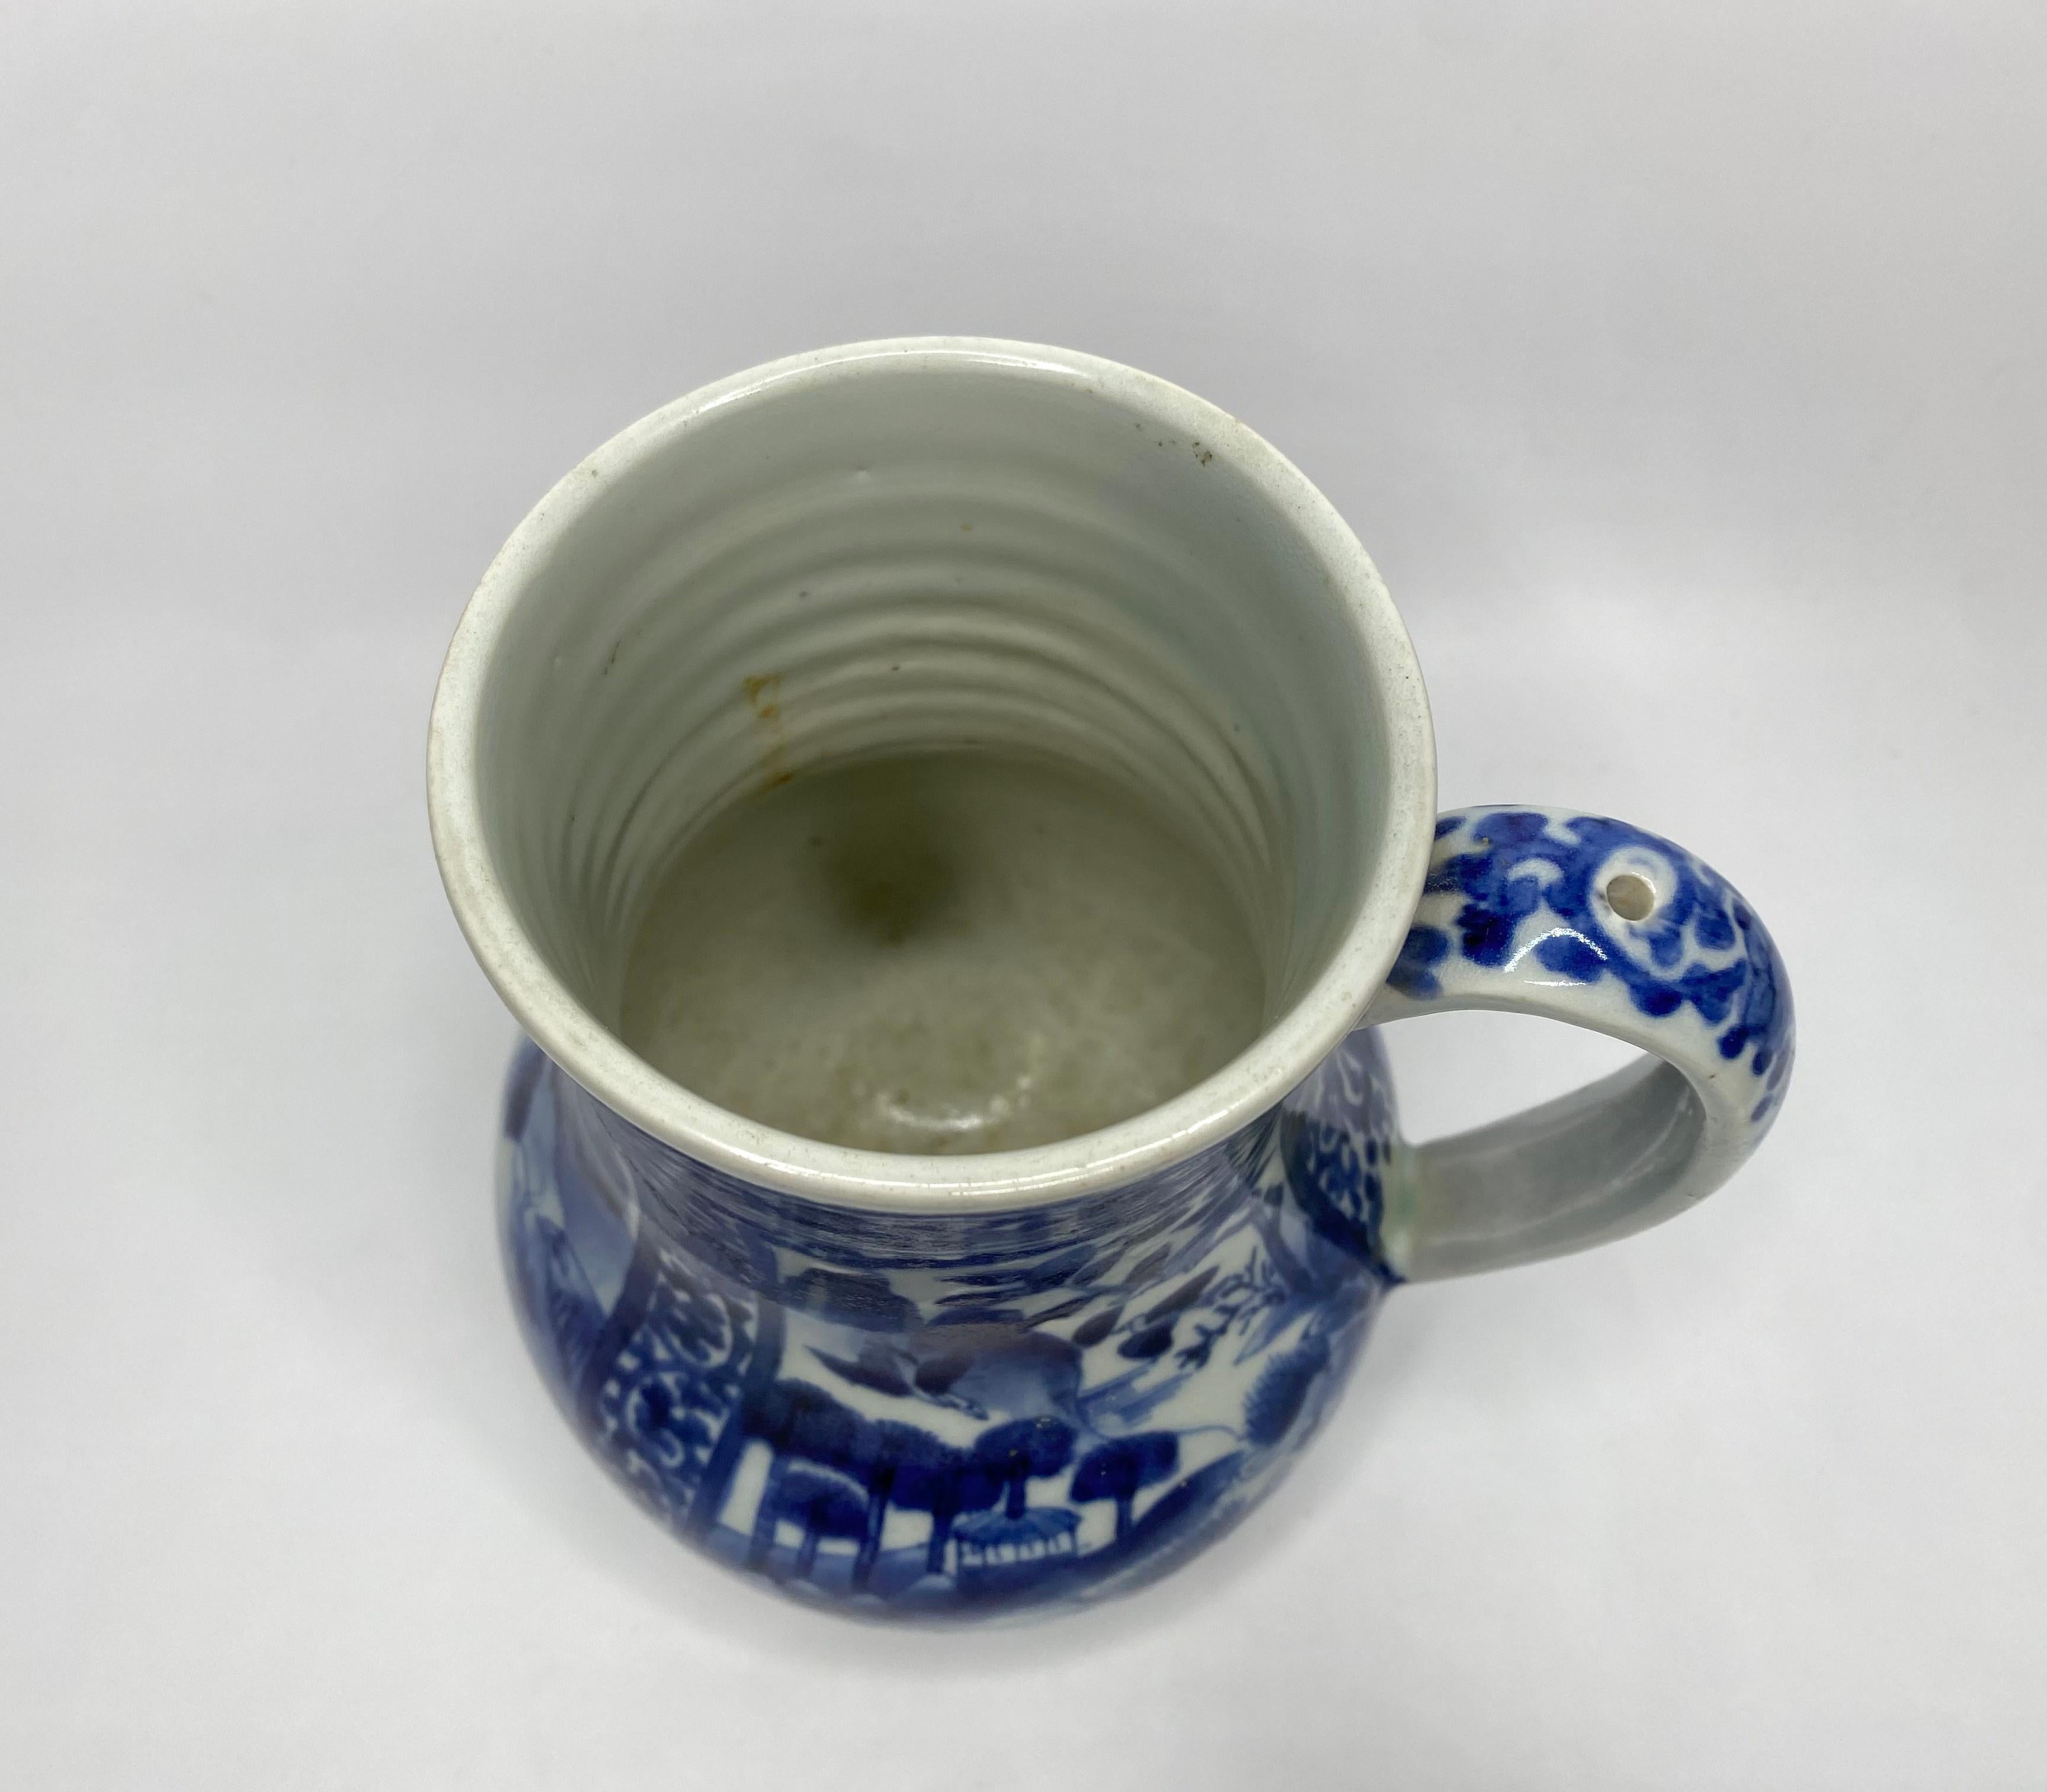 Japanese Arita Porcelain Tankard, Japan, c. 1700, Genroku Period